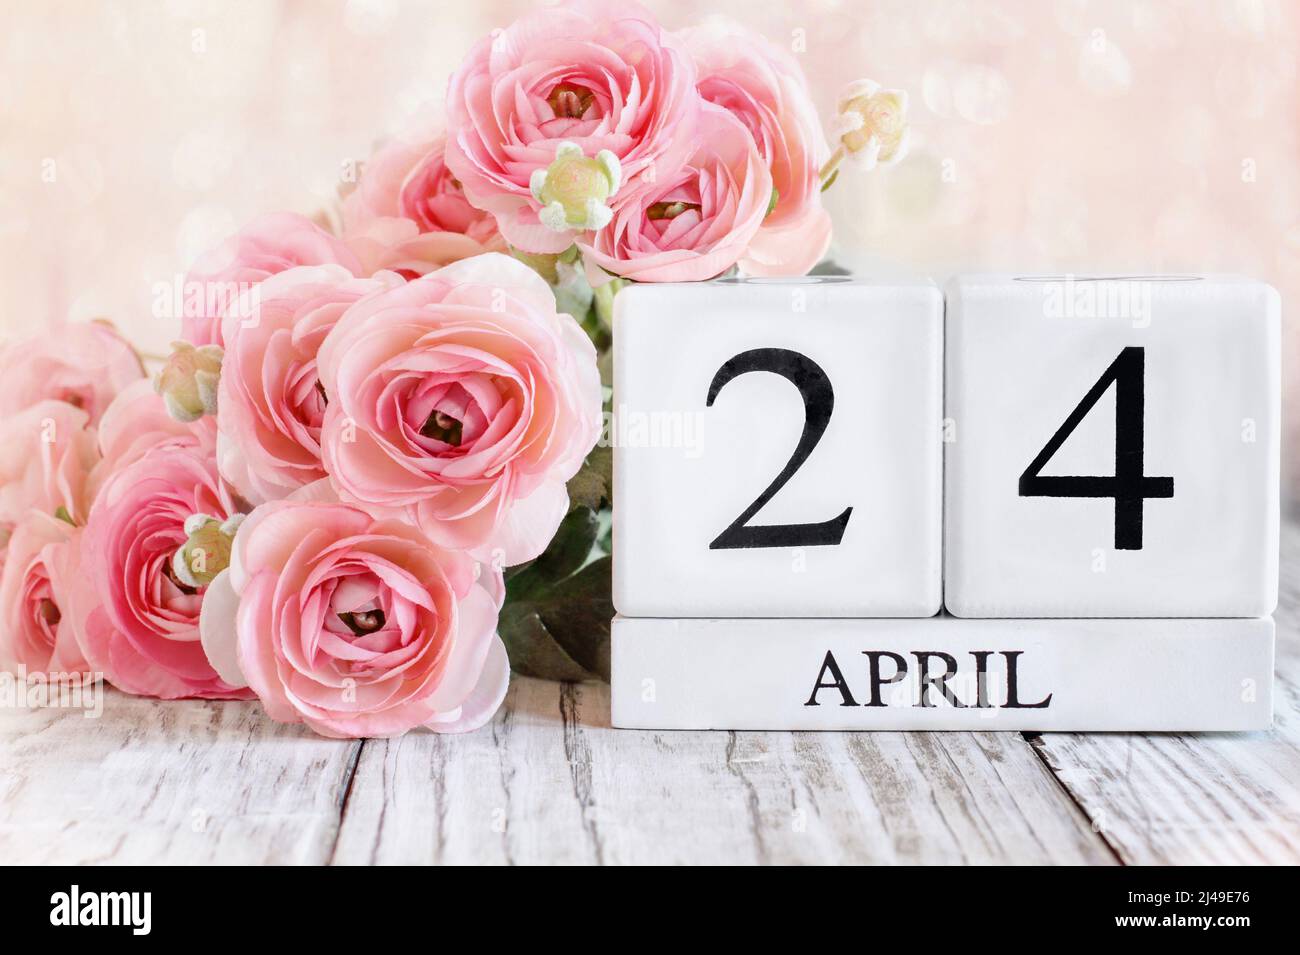 Bloques de calendario de madera blanca con fecha del 24th de abril. Enfoque selectivo con fondo borroso. Foto de stock